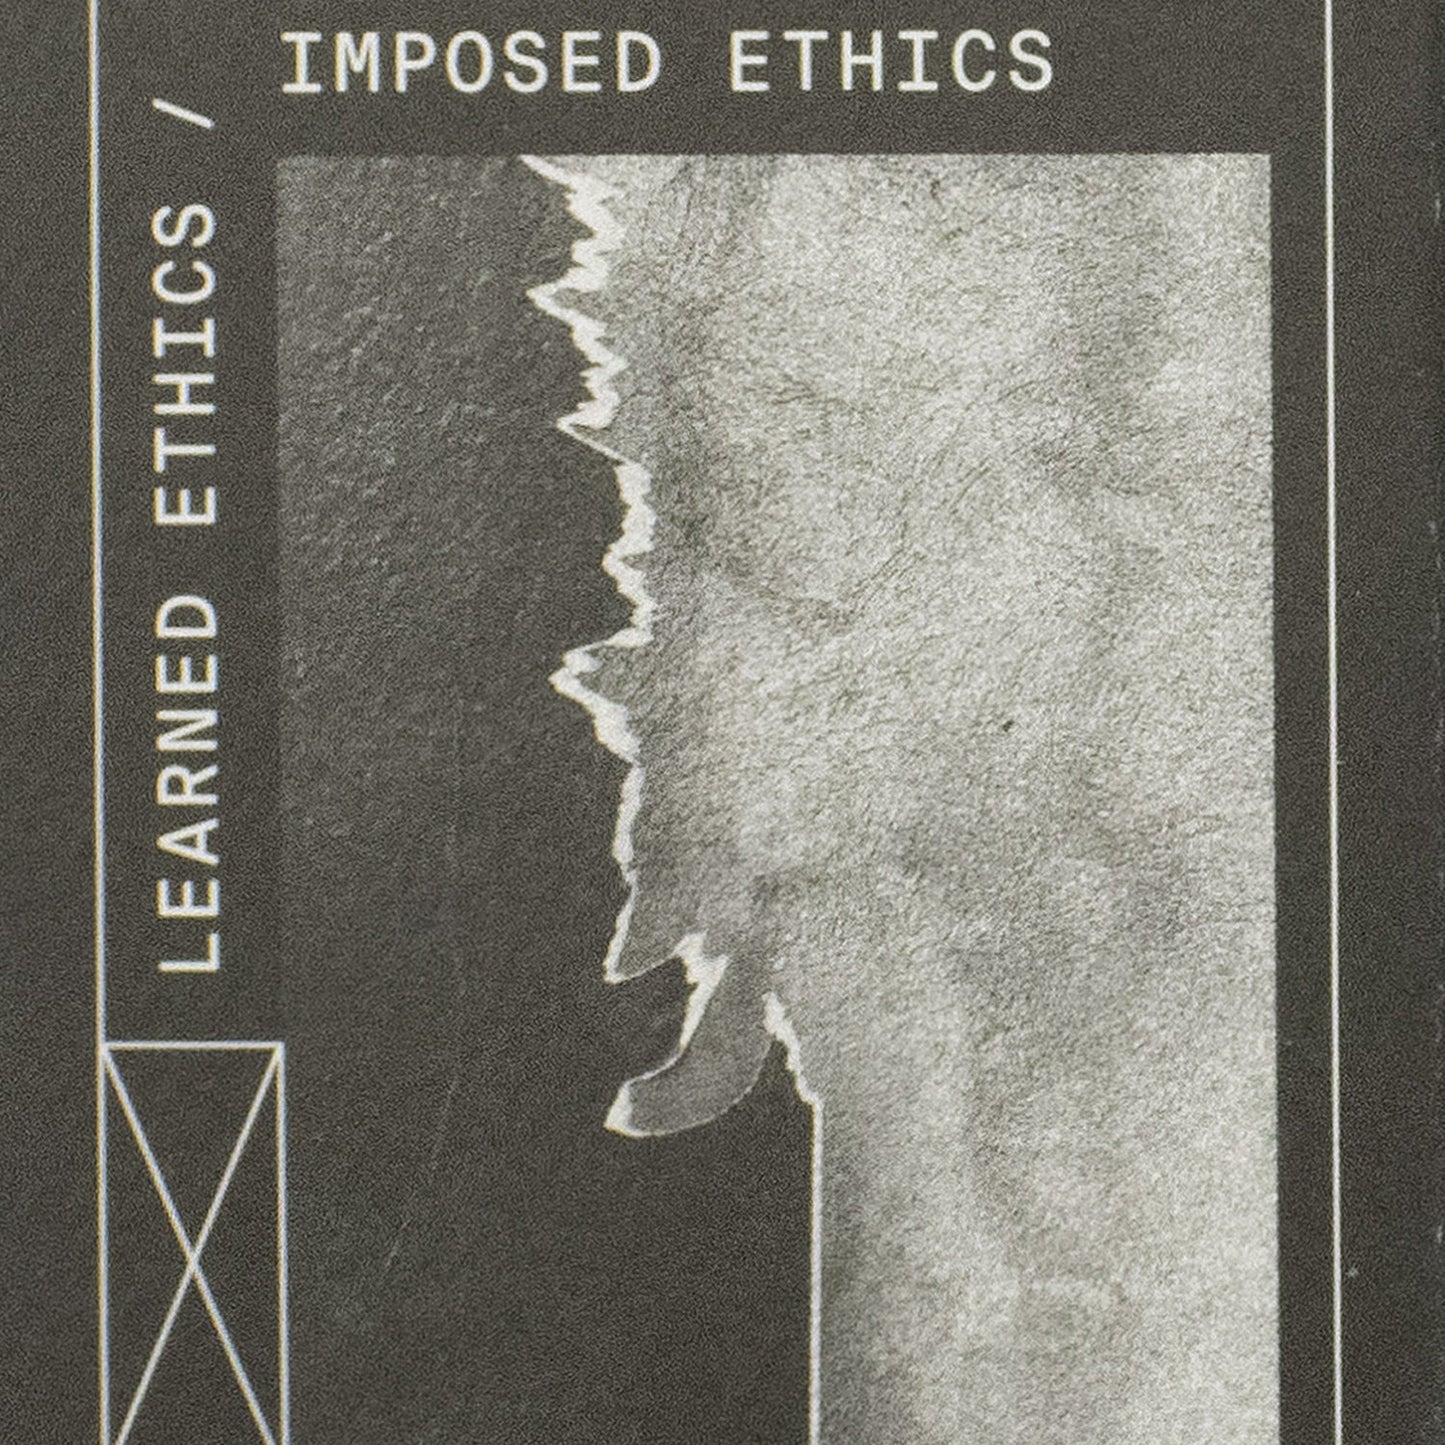 CASS / KOHL - Learned Ethics / Imposed Ethics